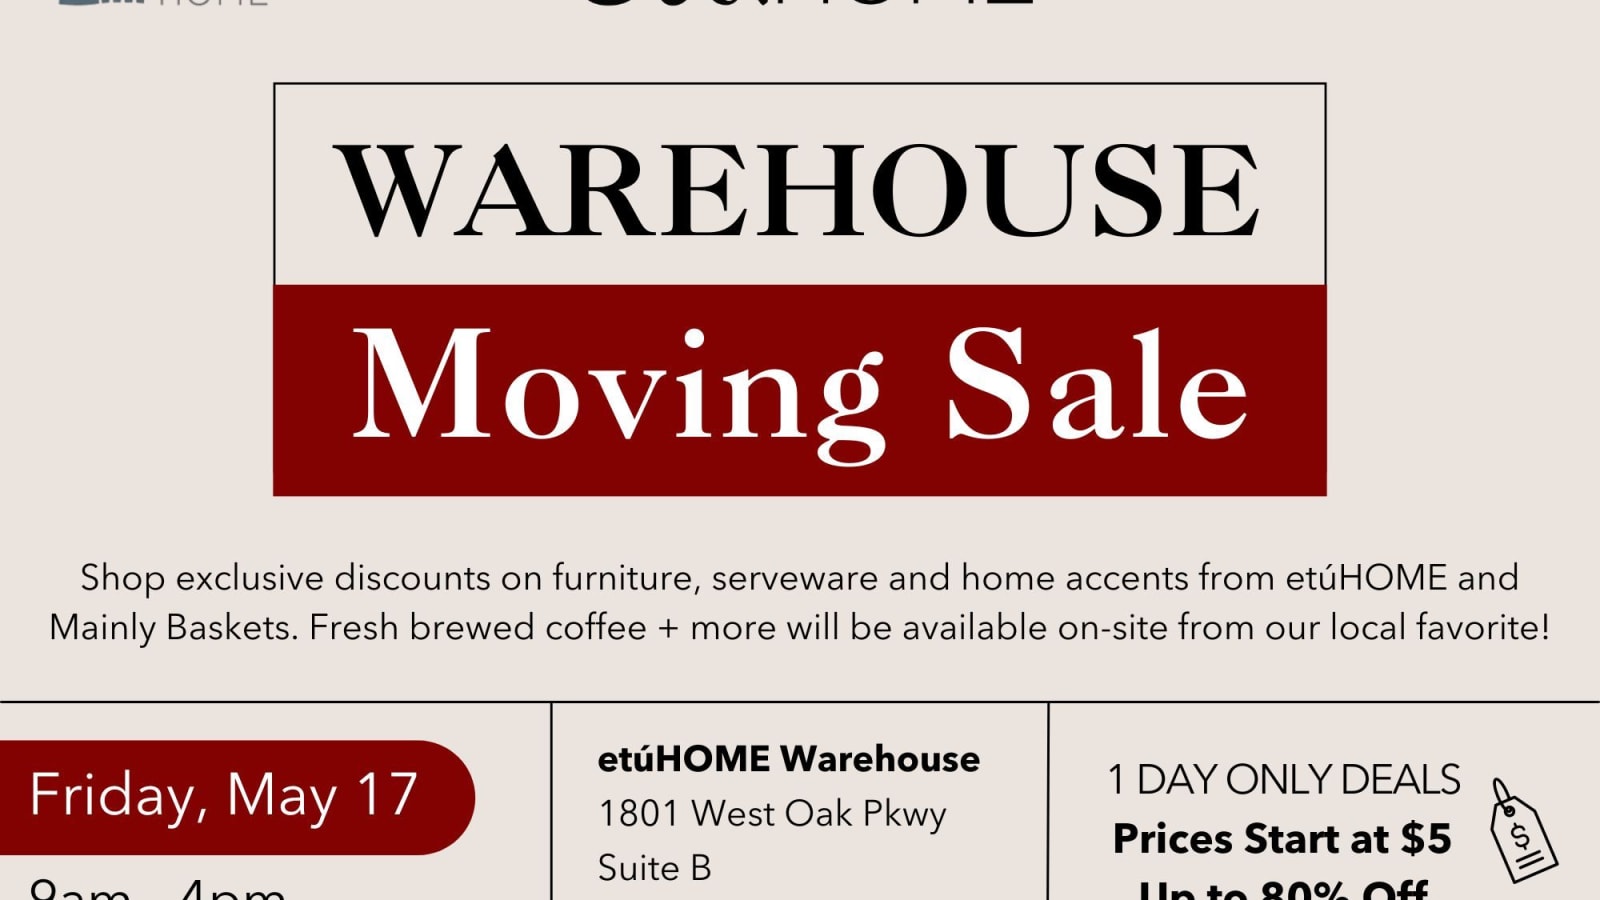 etúHOME Warehouse Moving Sale